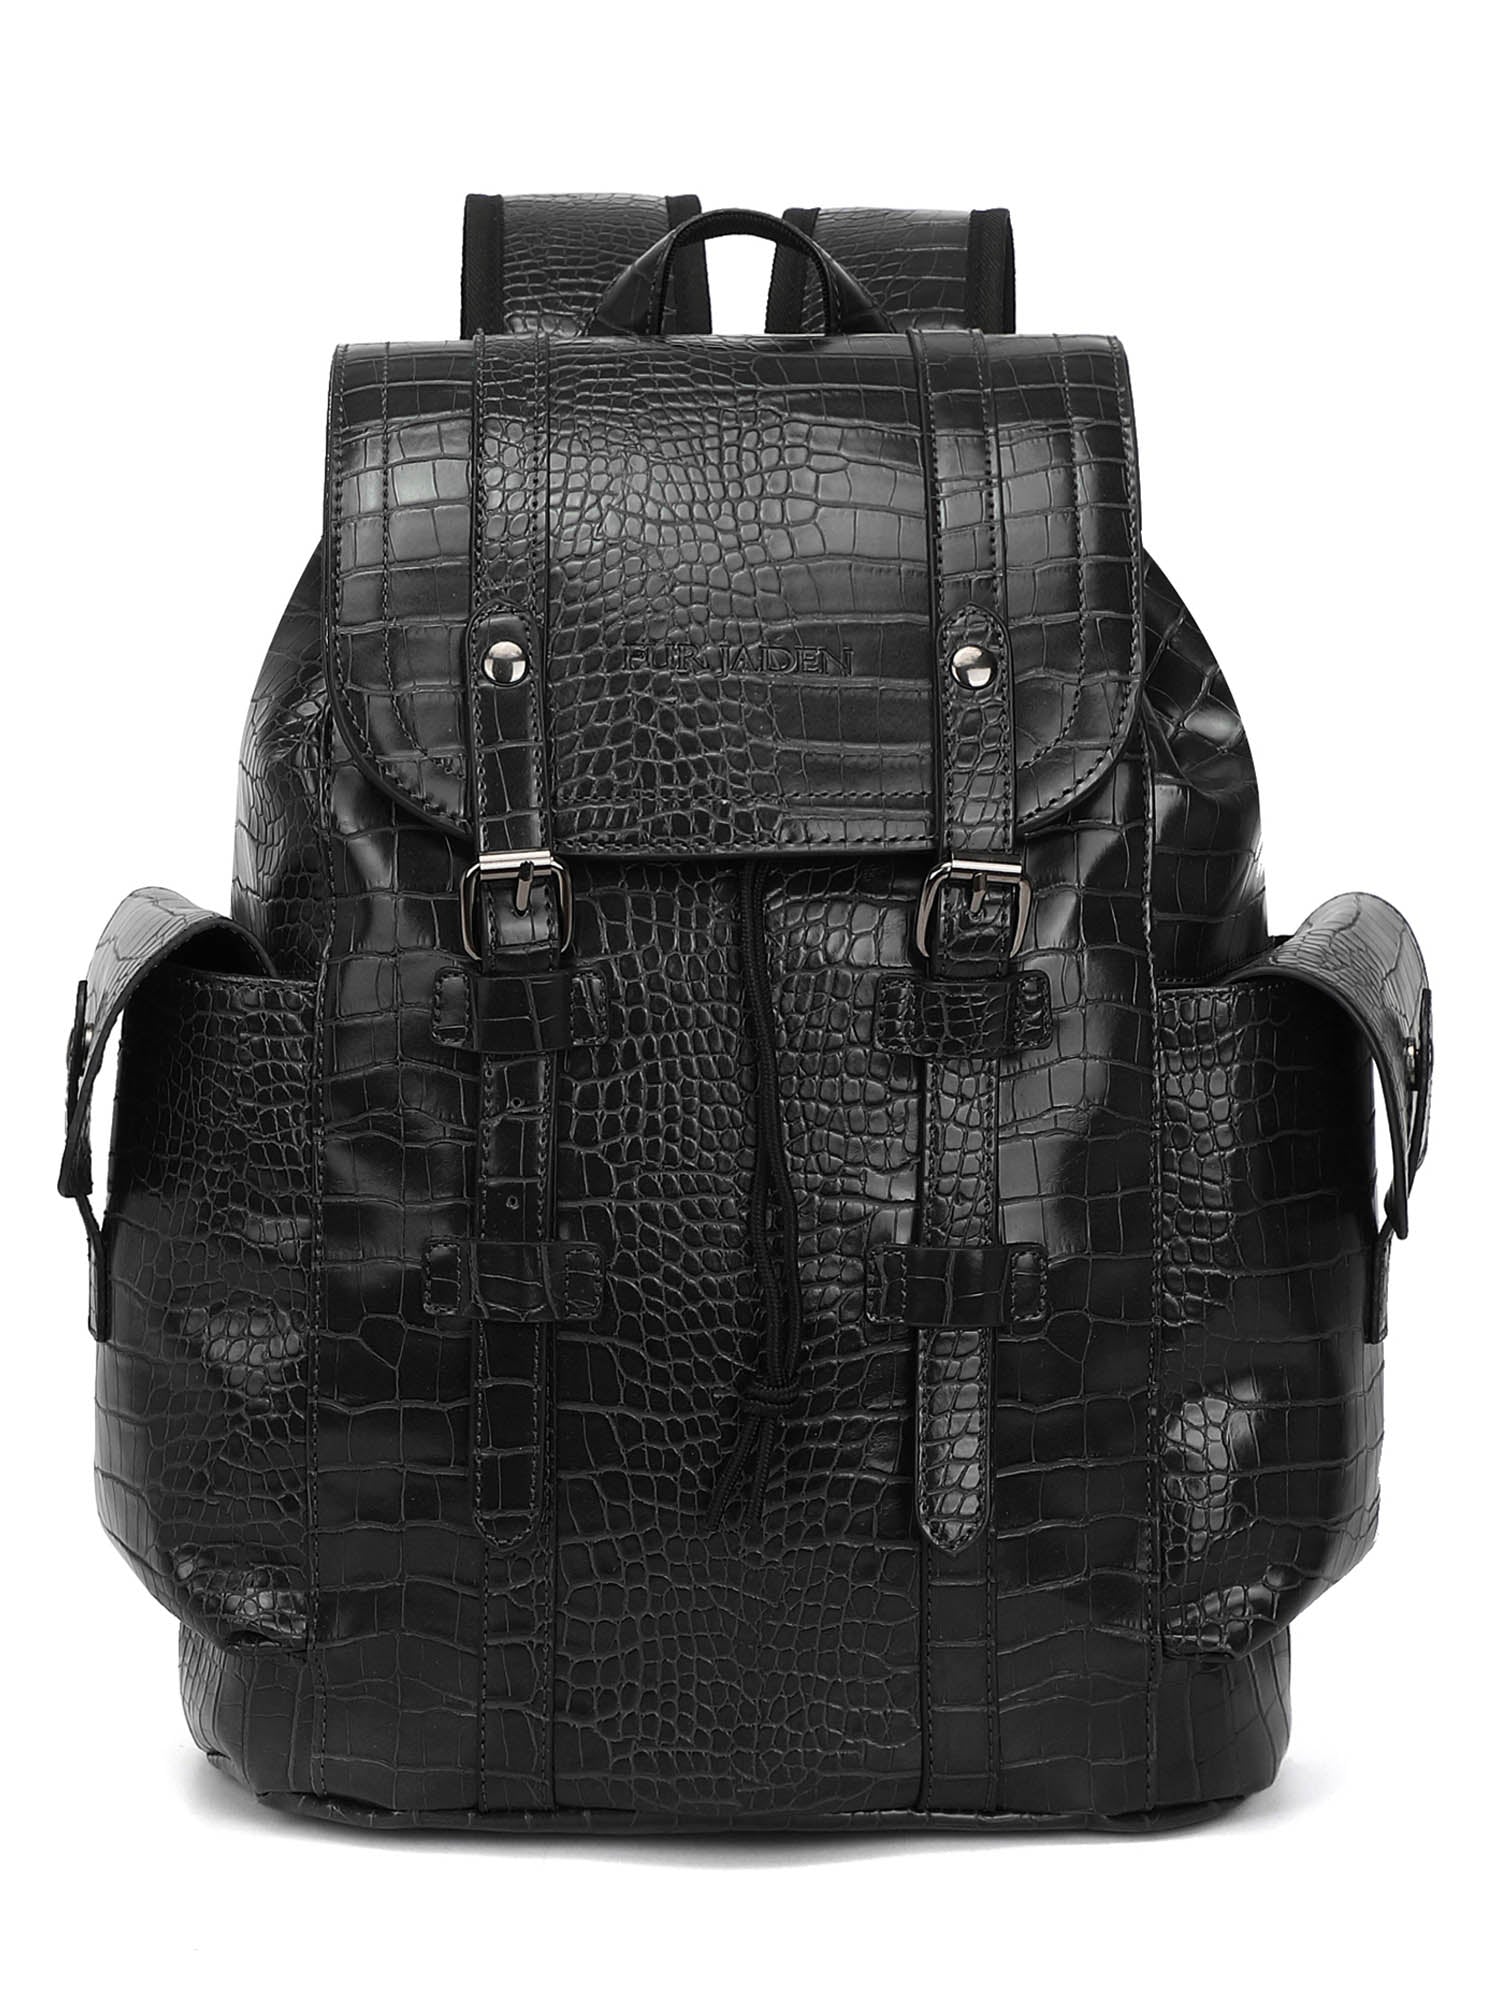 Pro-IX Laptop Backpack | Black